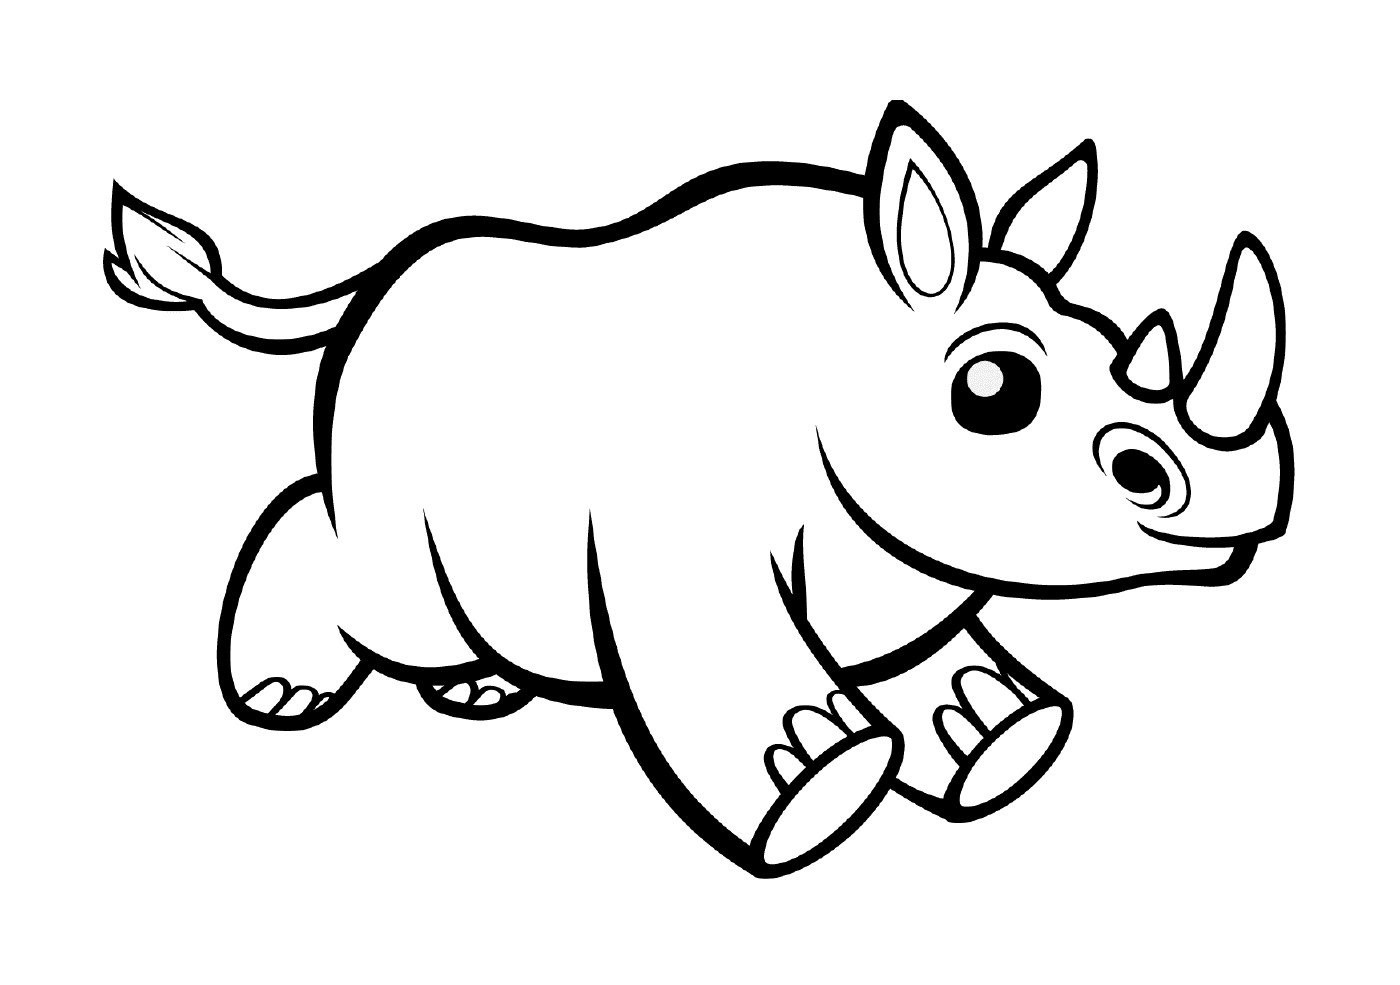   Un animal ressemblant à un rhinocéros 